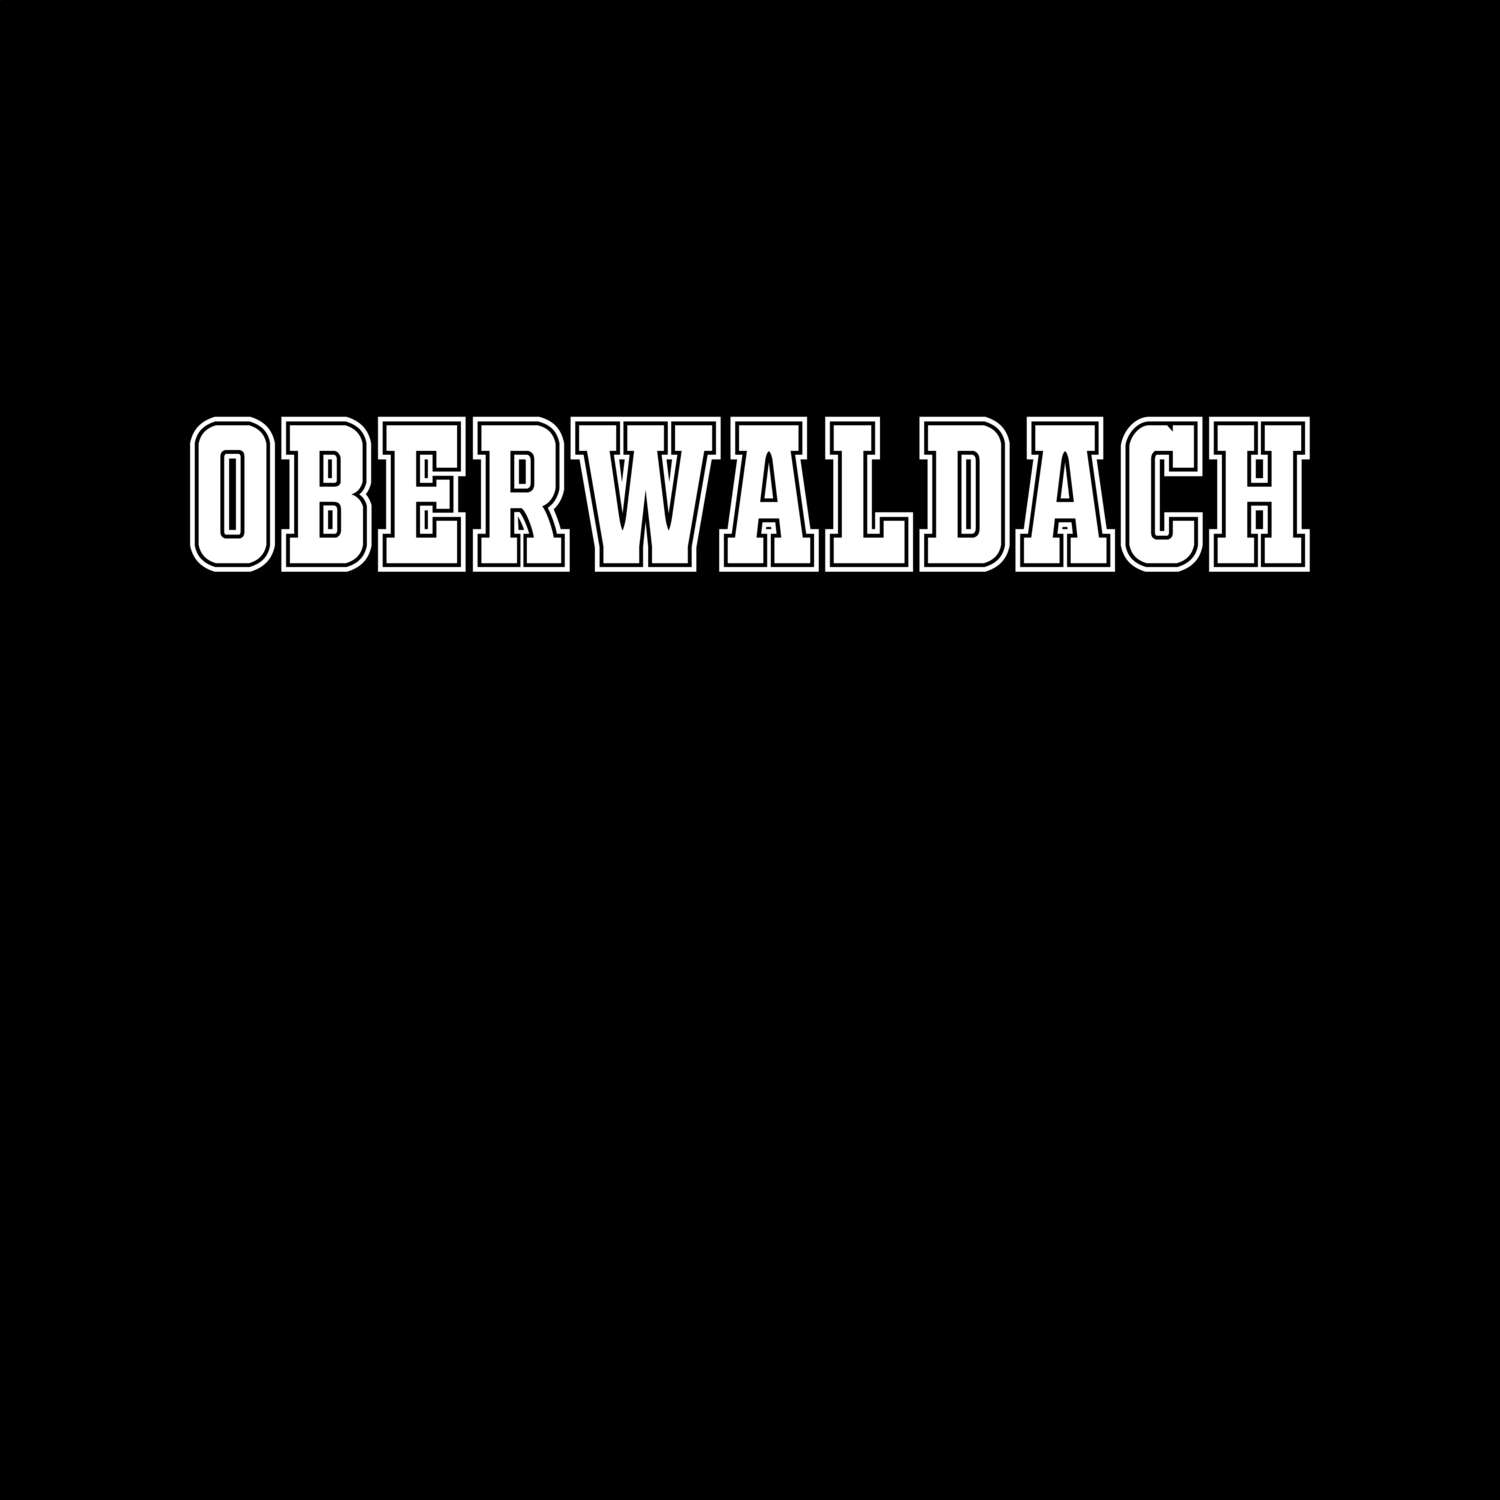 Oberwaldach T-Shirt »Classic«